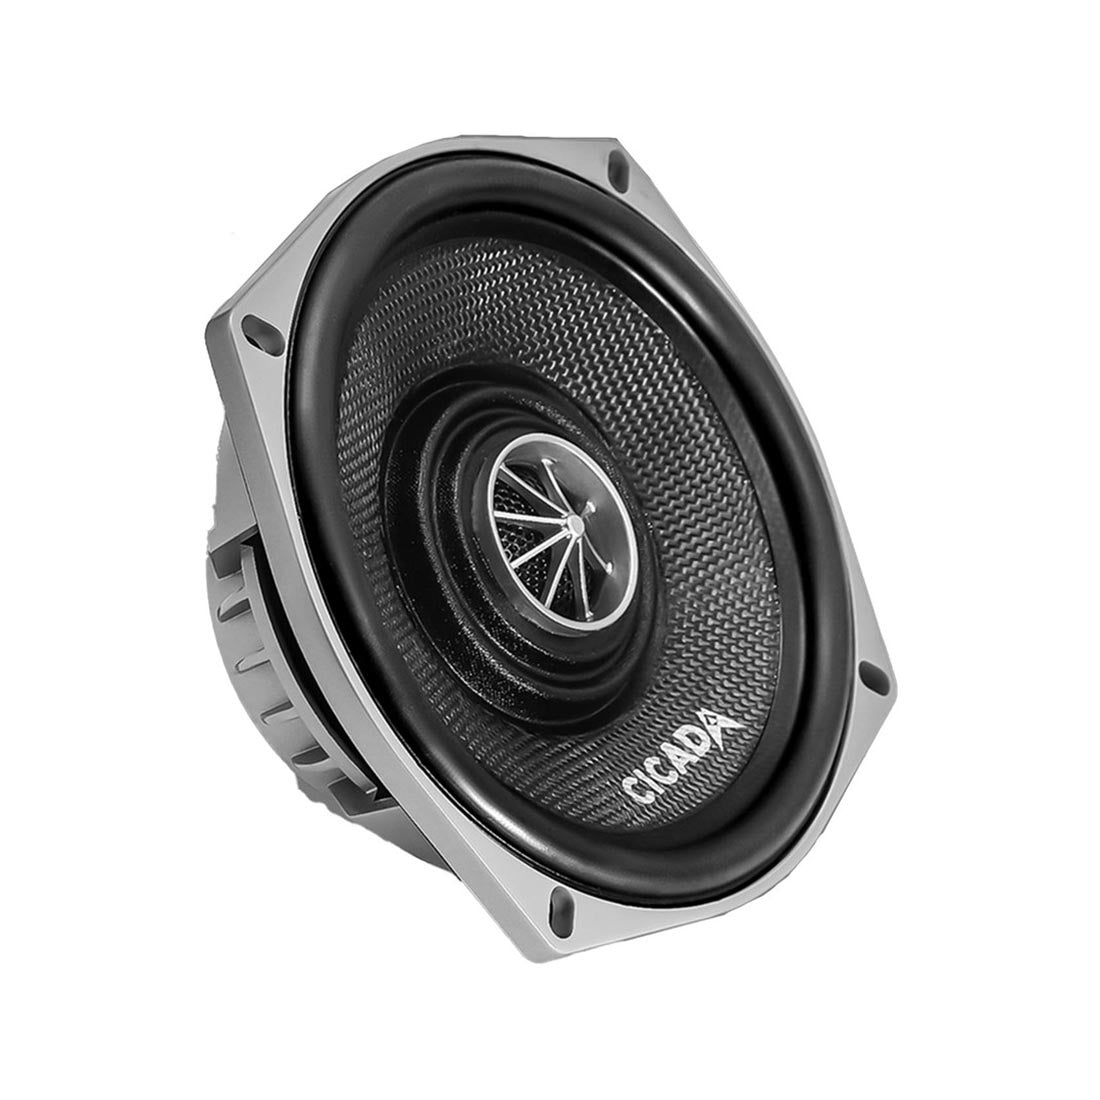 Cicada Audio CXX5252 5.25" 2-Ohm Pro Coaxial Motorcycle Speakers